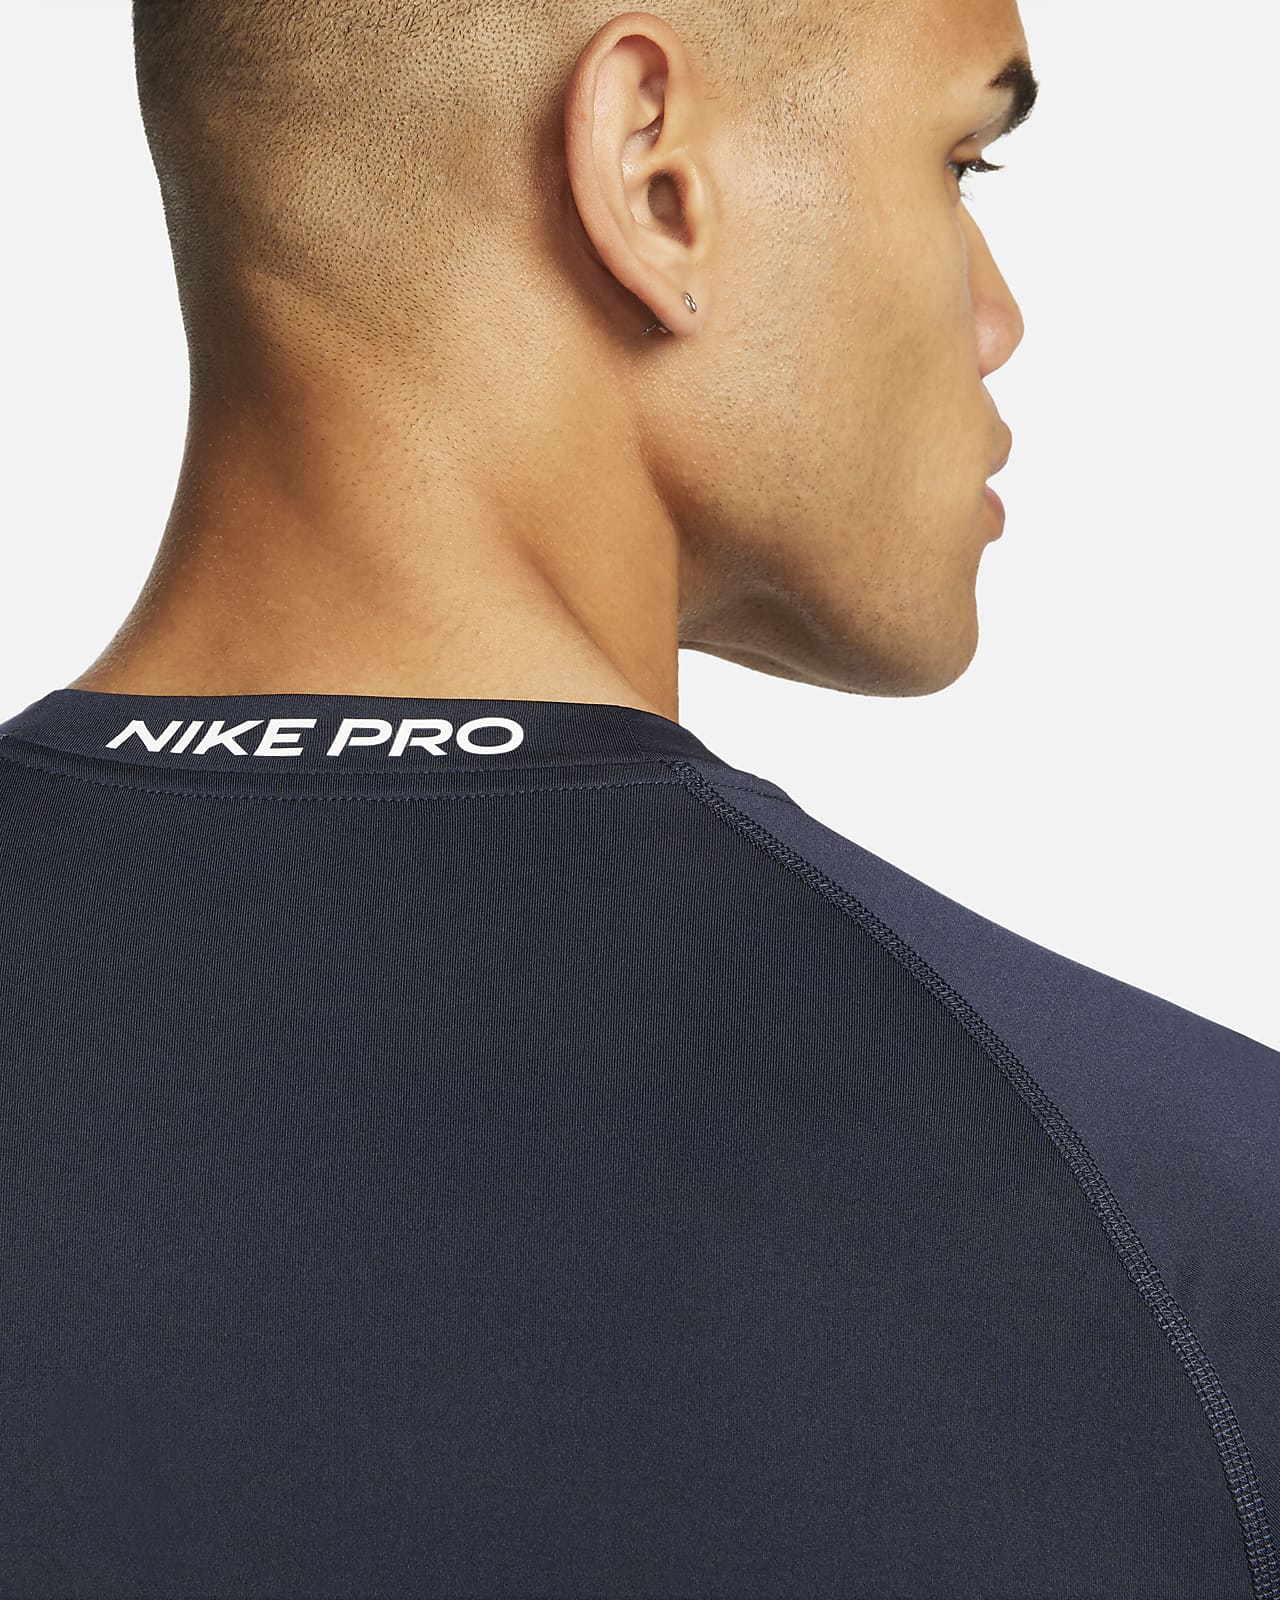 Nike Men's Dri-Fit Pro Compression Short Sleeve T-shirt Sports Gym Tight Tee